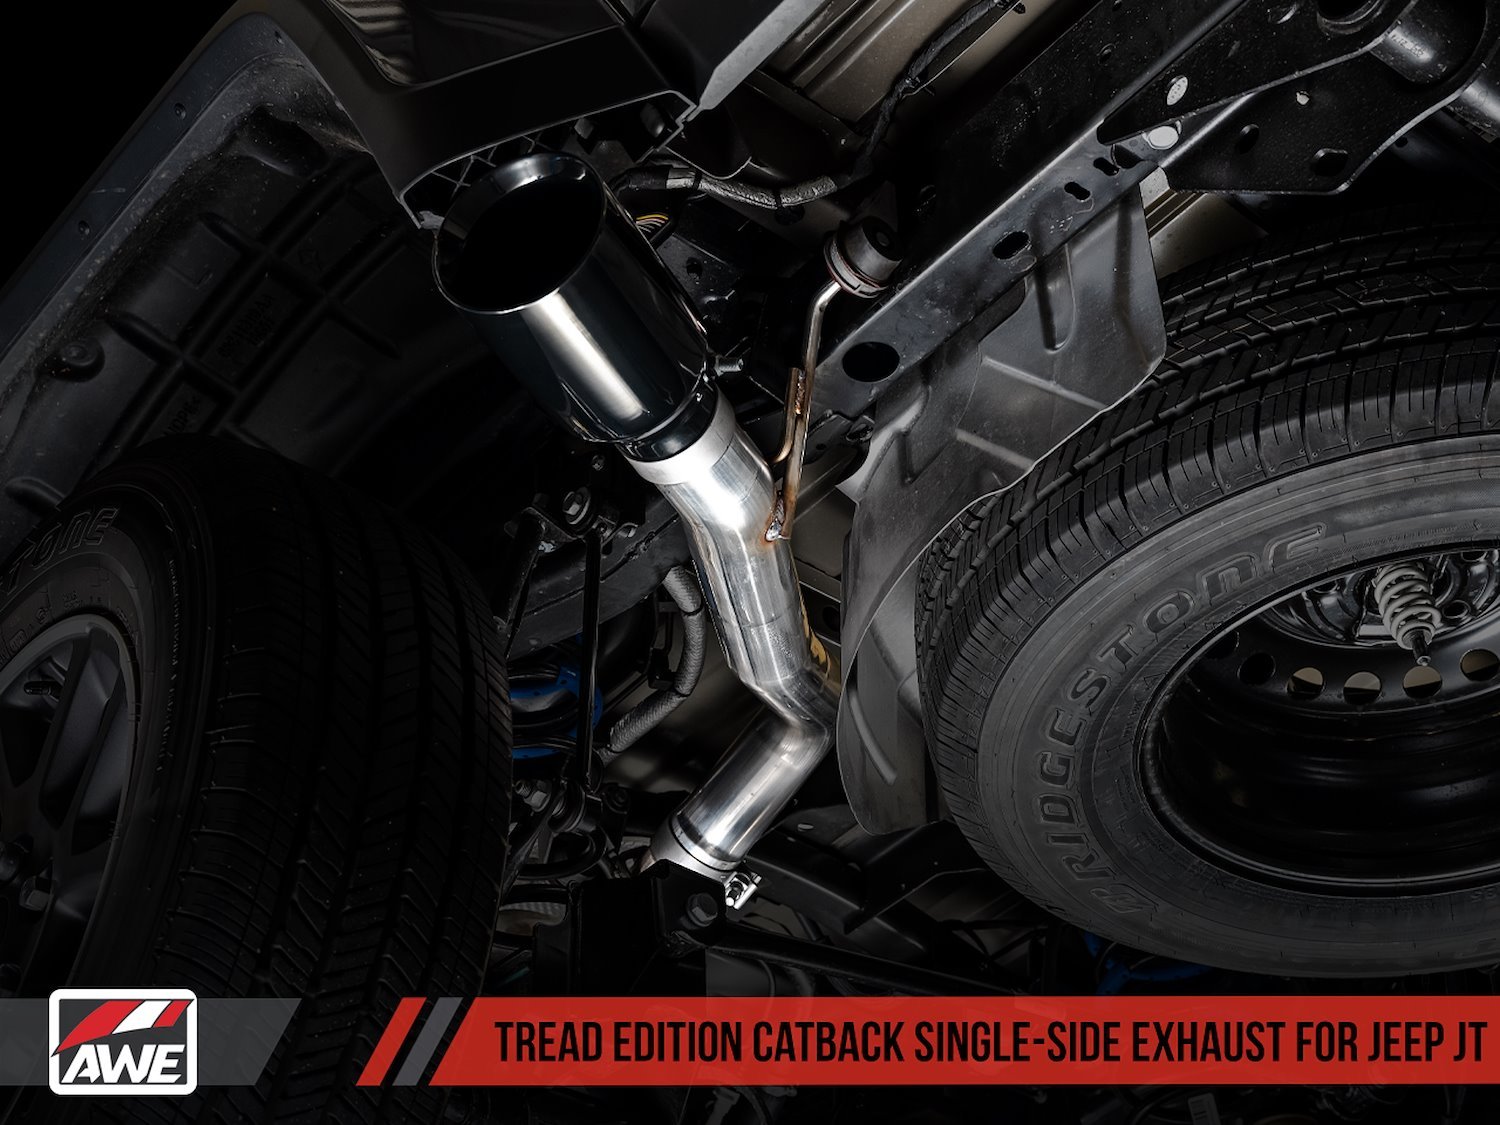 Tread Edition Catback Single-Side Exhaust for Jeep JT 3.6L - Diamond Black Tip